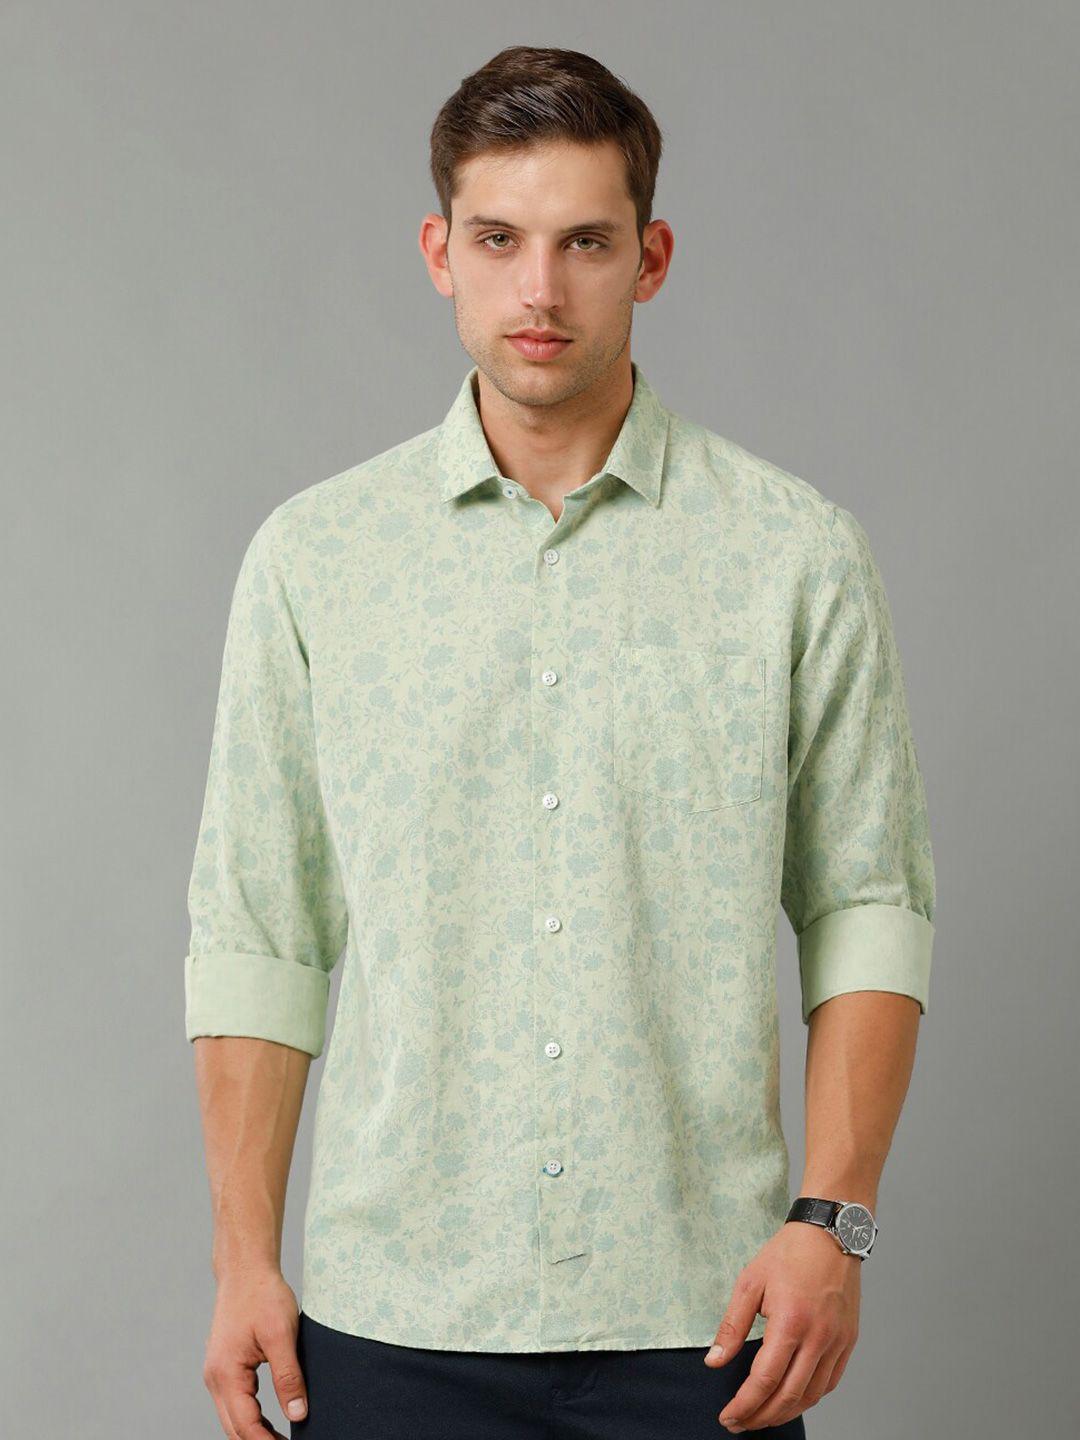 linen club contemporary floral printed cotton linen casual shirt